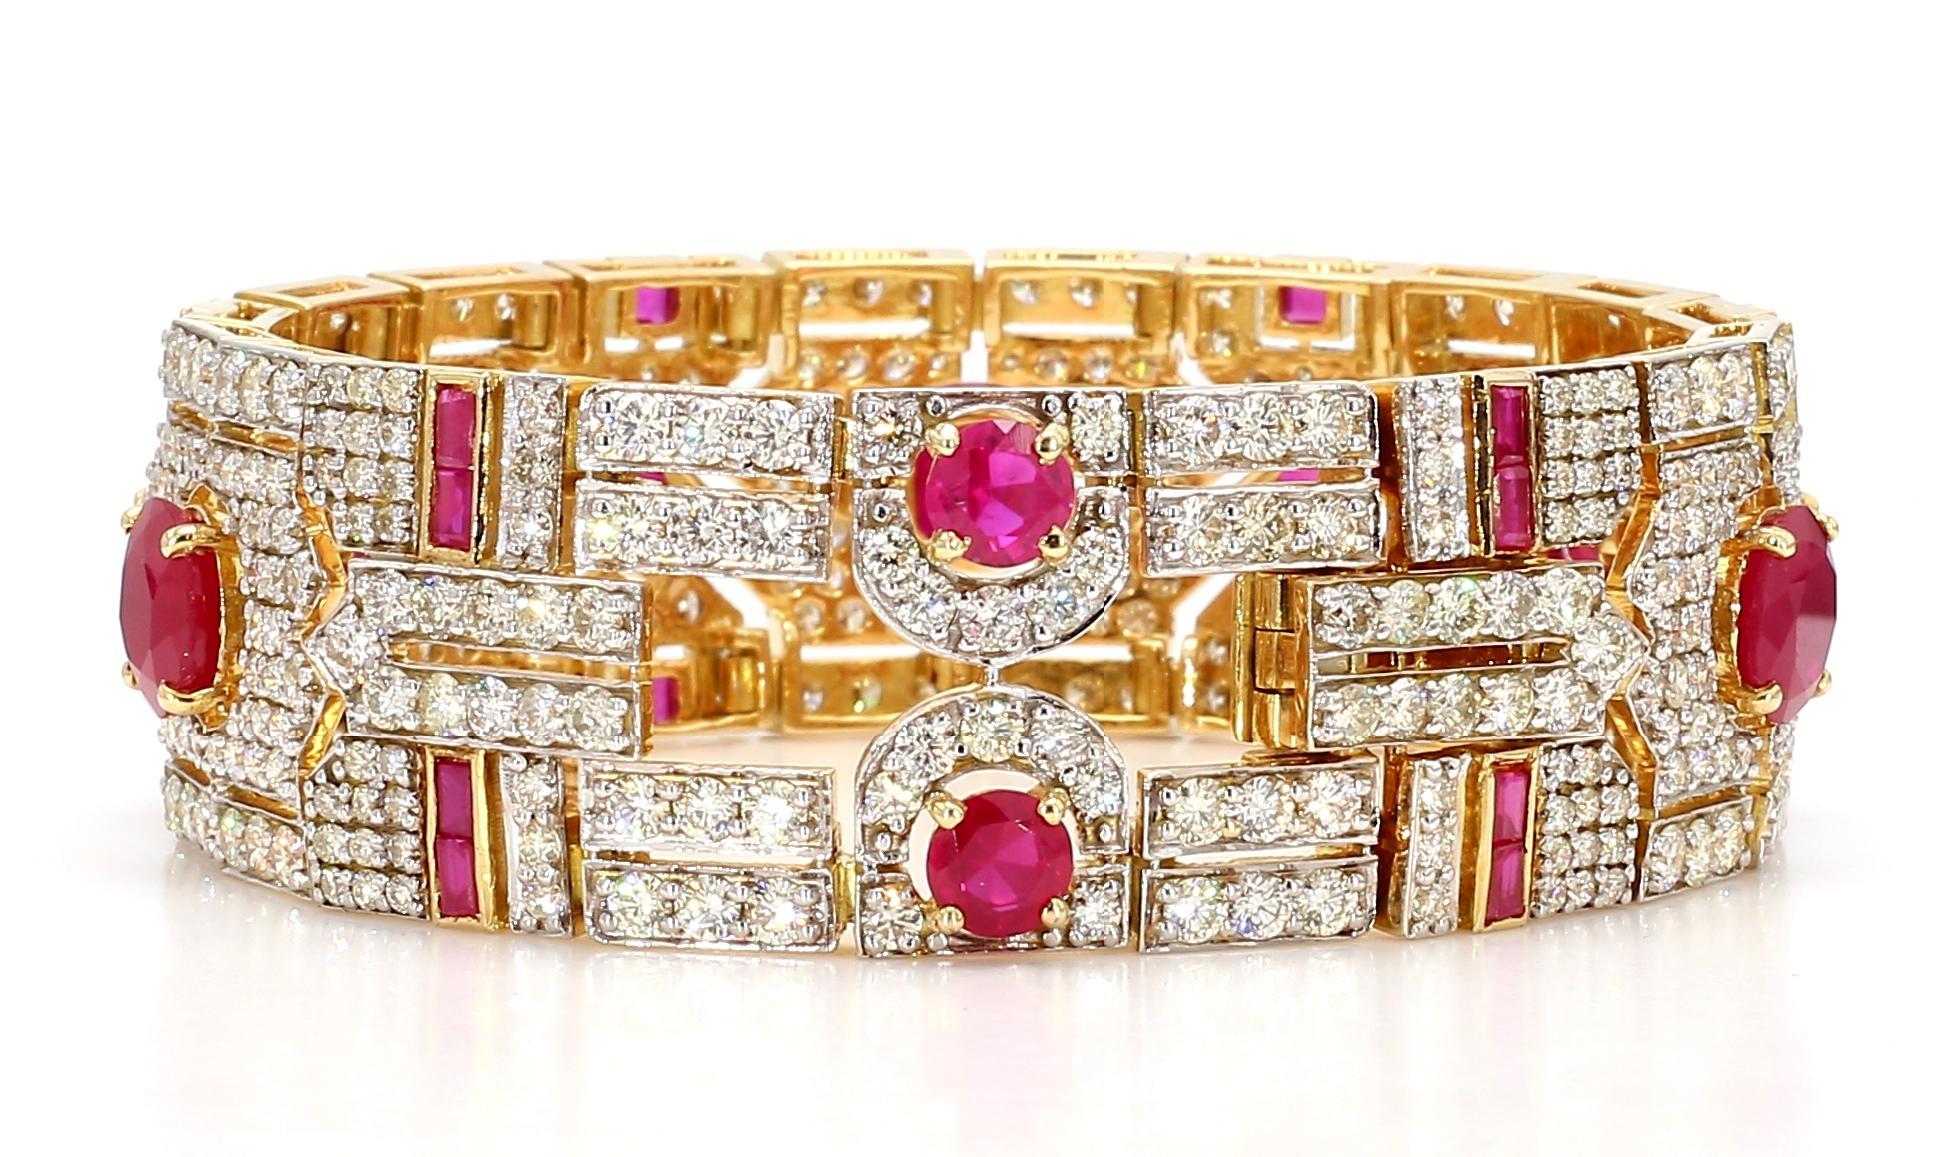 13.25 Carat Diamond 16.59 Carat Ruby Bracelet 18K White Gold In New Condition For Sale In New York, NY